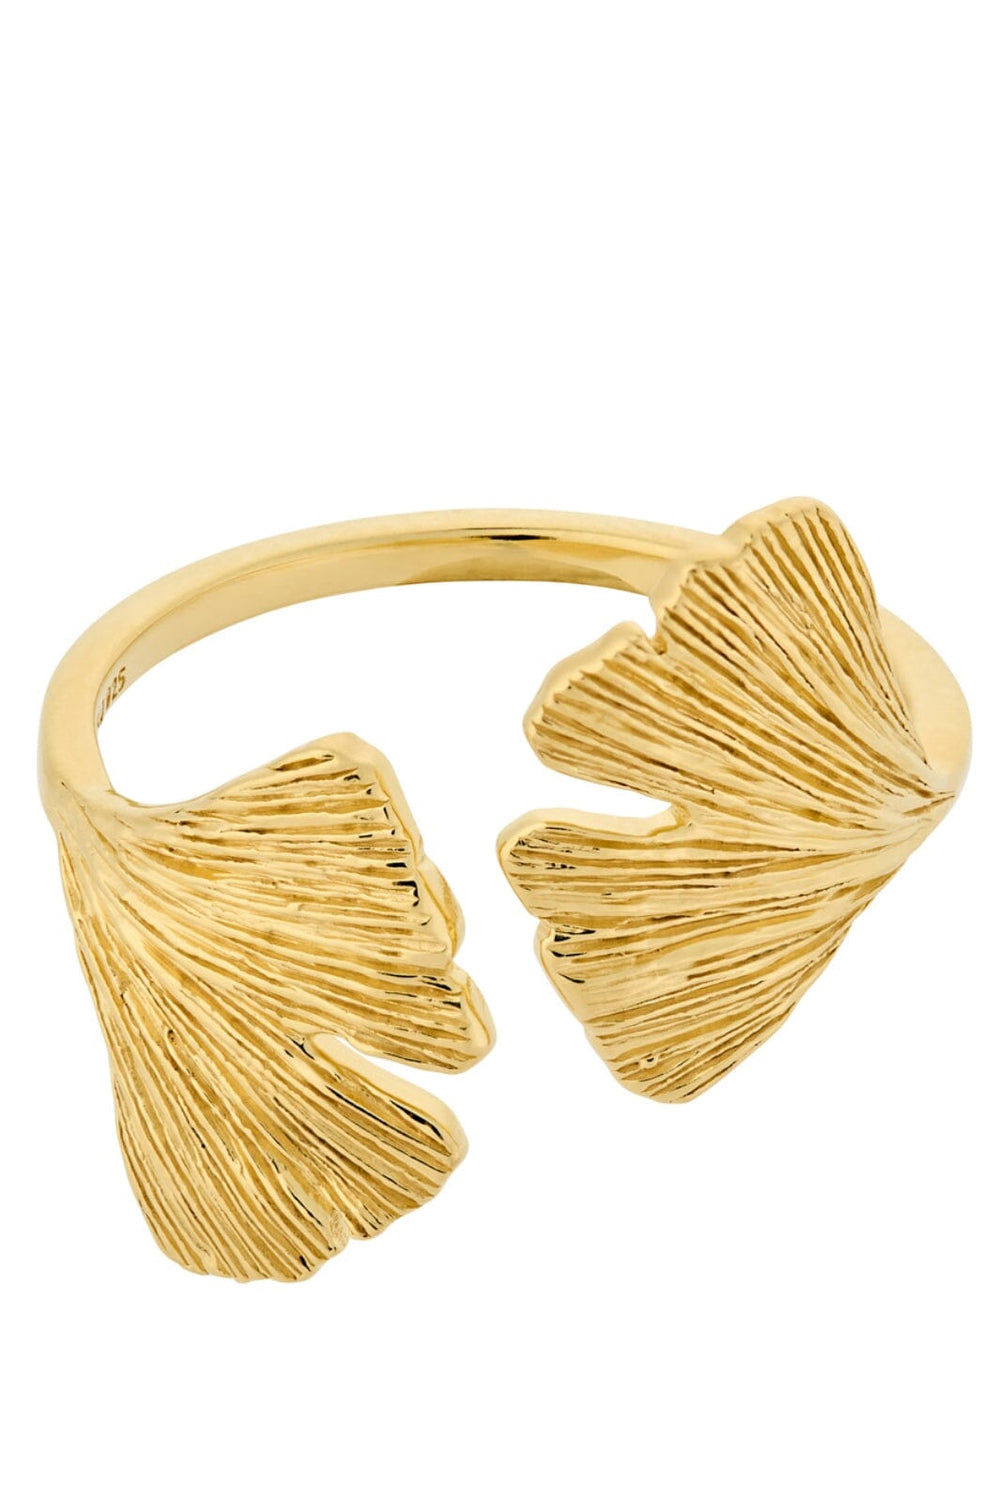 Pernille Corydon Jewellery - Biloba Ring - Gold Plated Ringe 